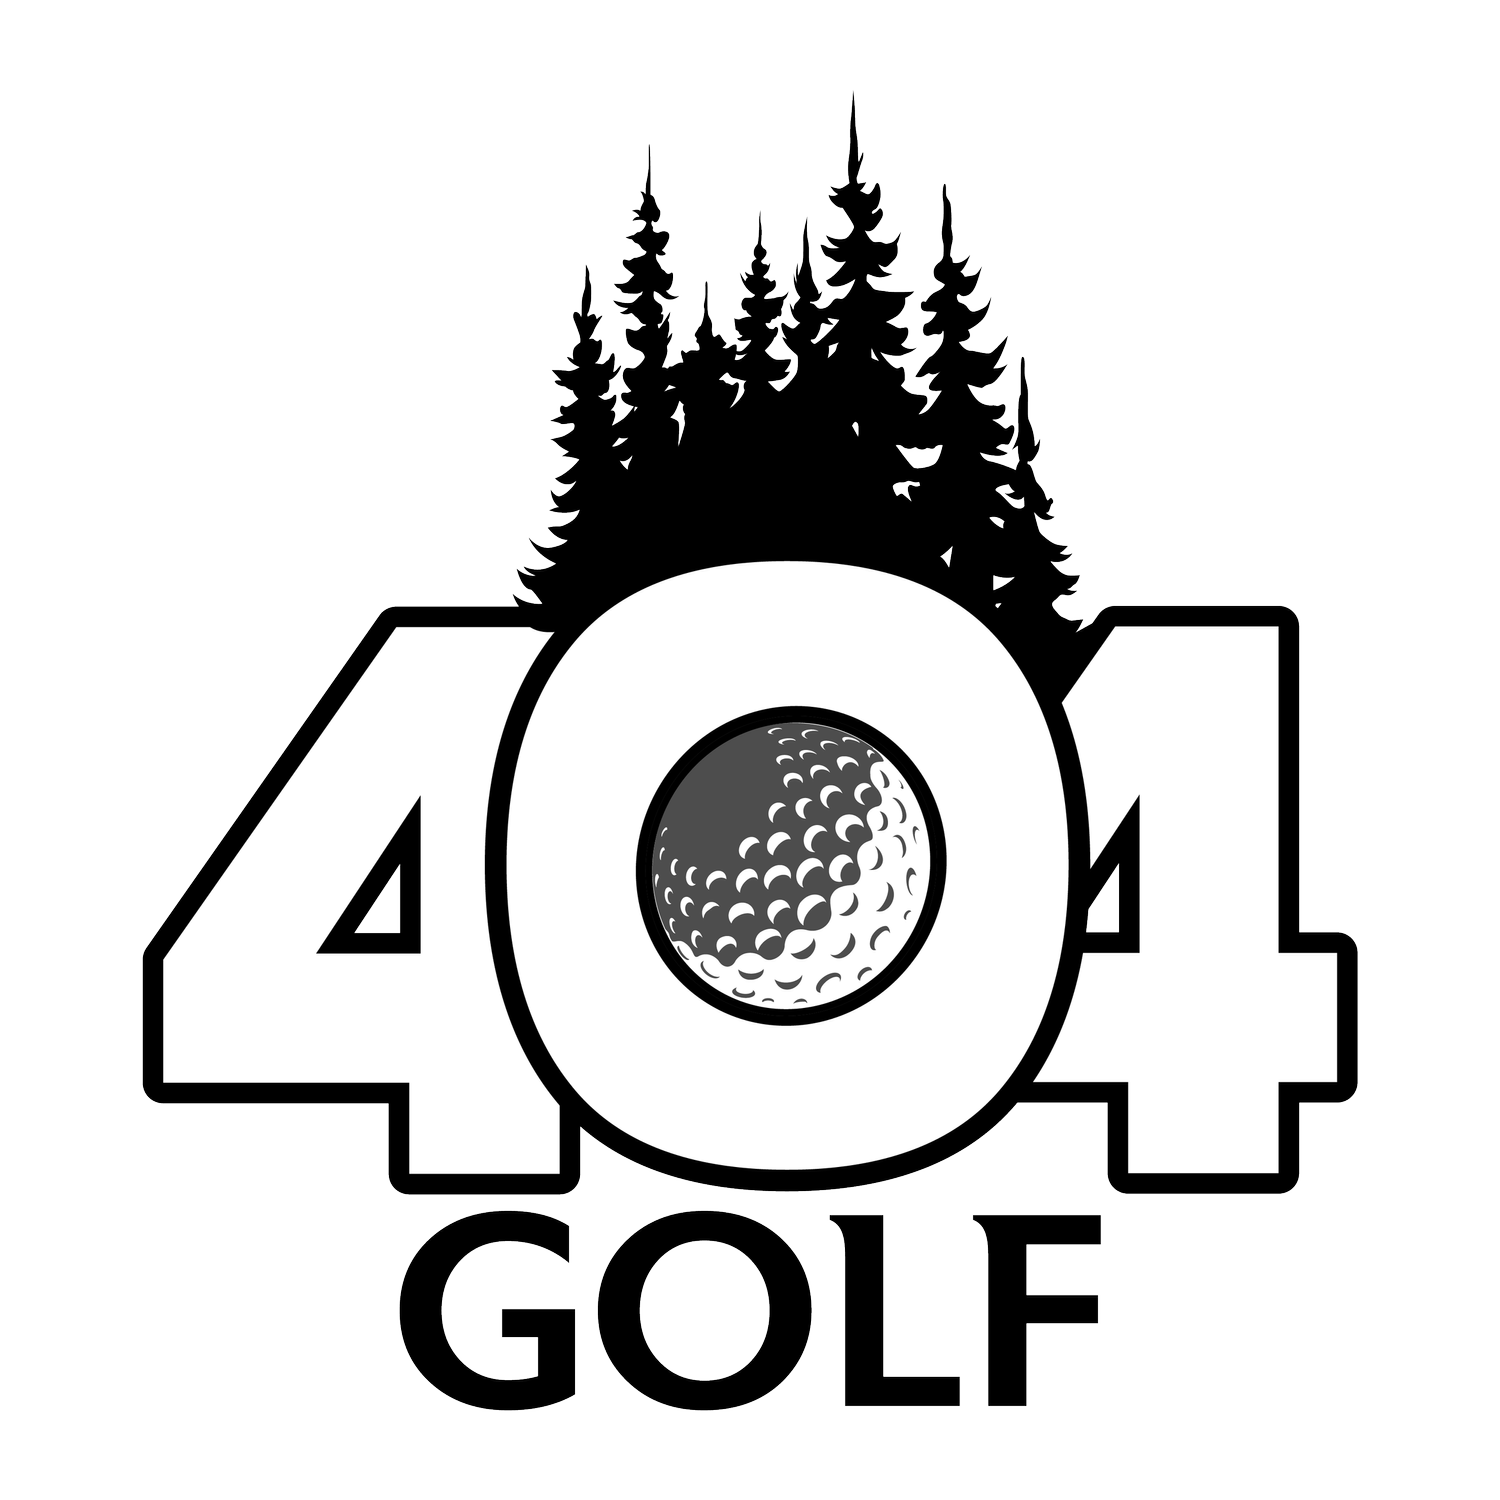 404 Golf